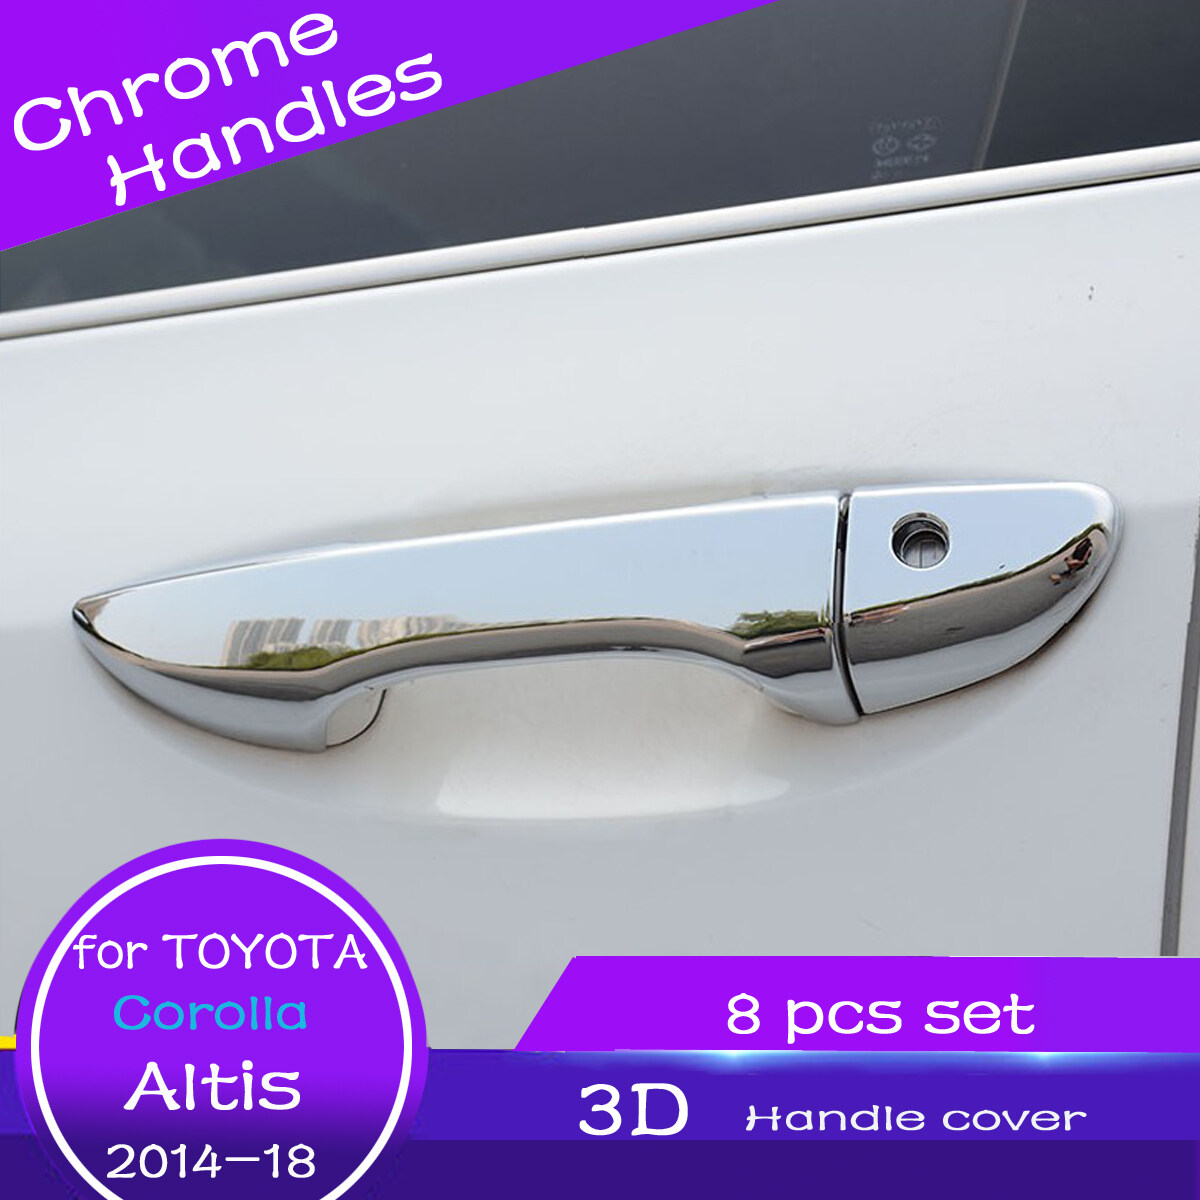 LAIFU 8Pcs Chrome handle cover for toyota altis 2014 2015 2016 2017 2018